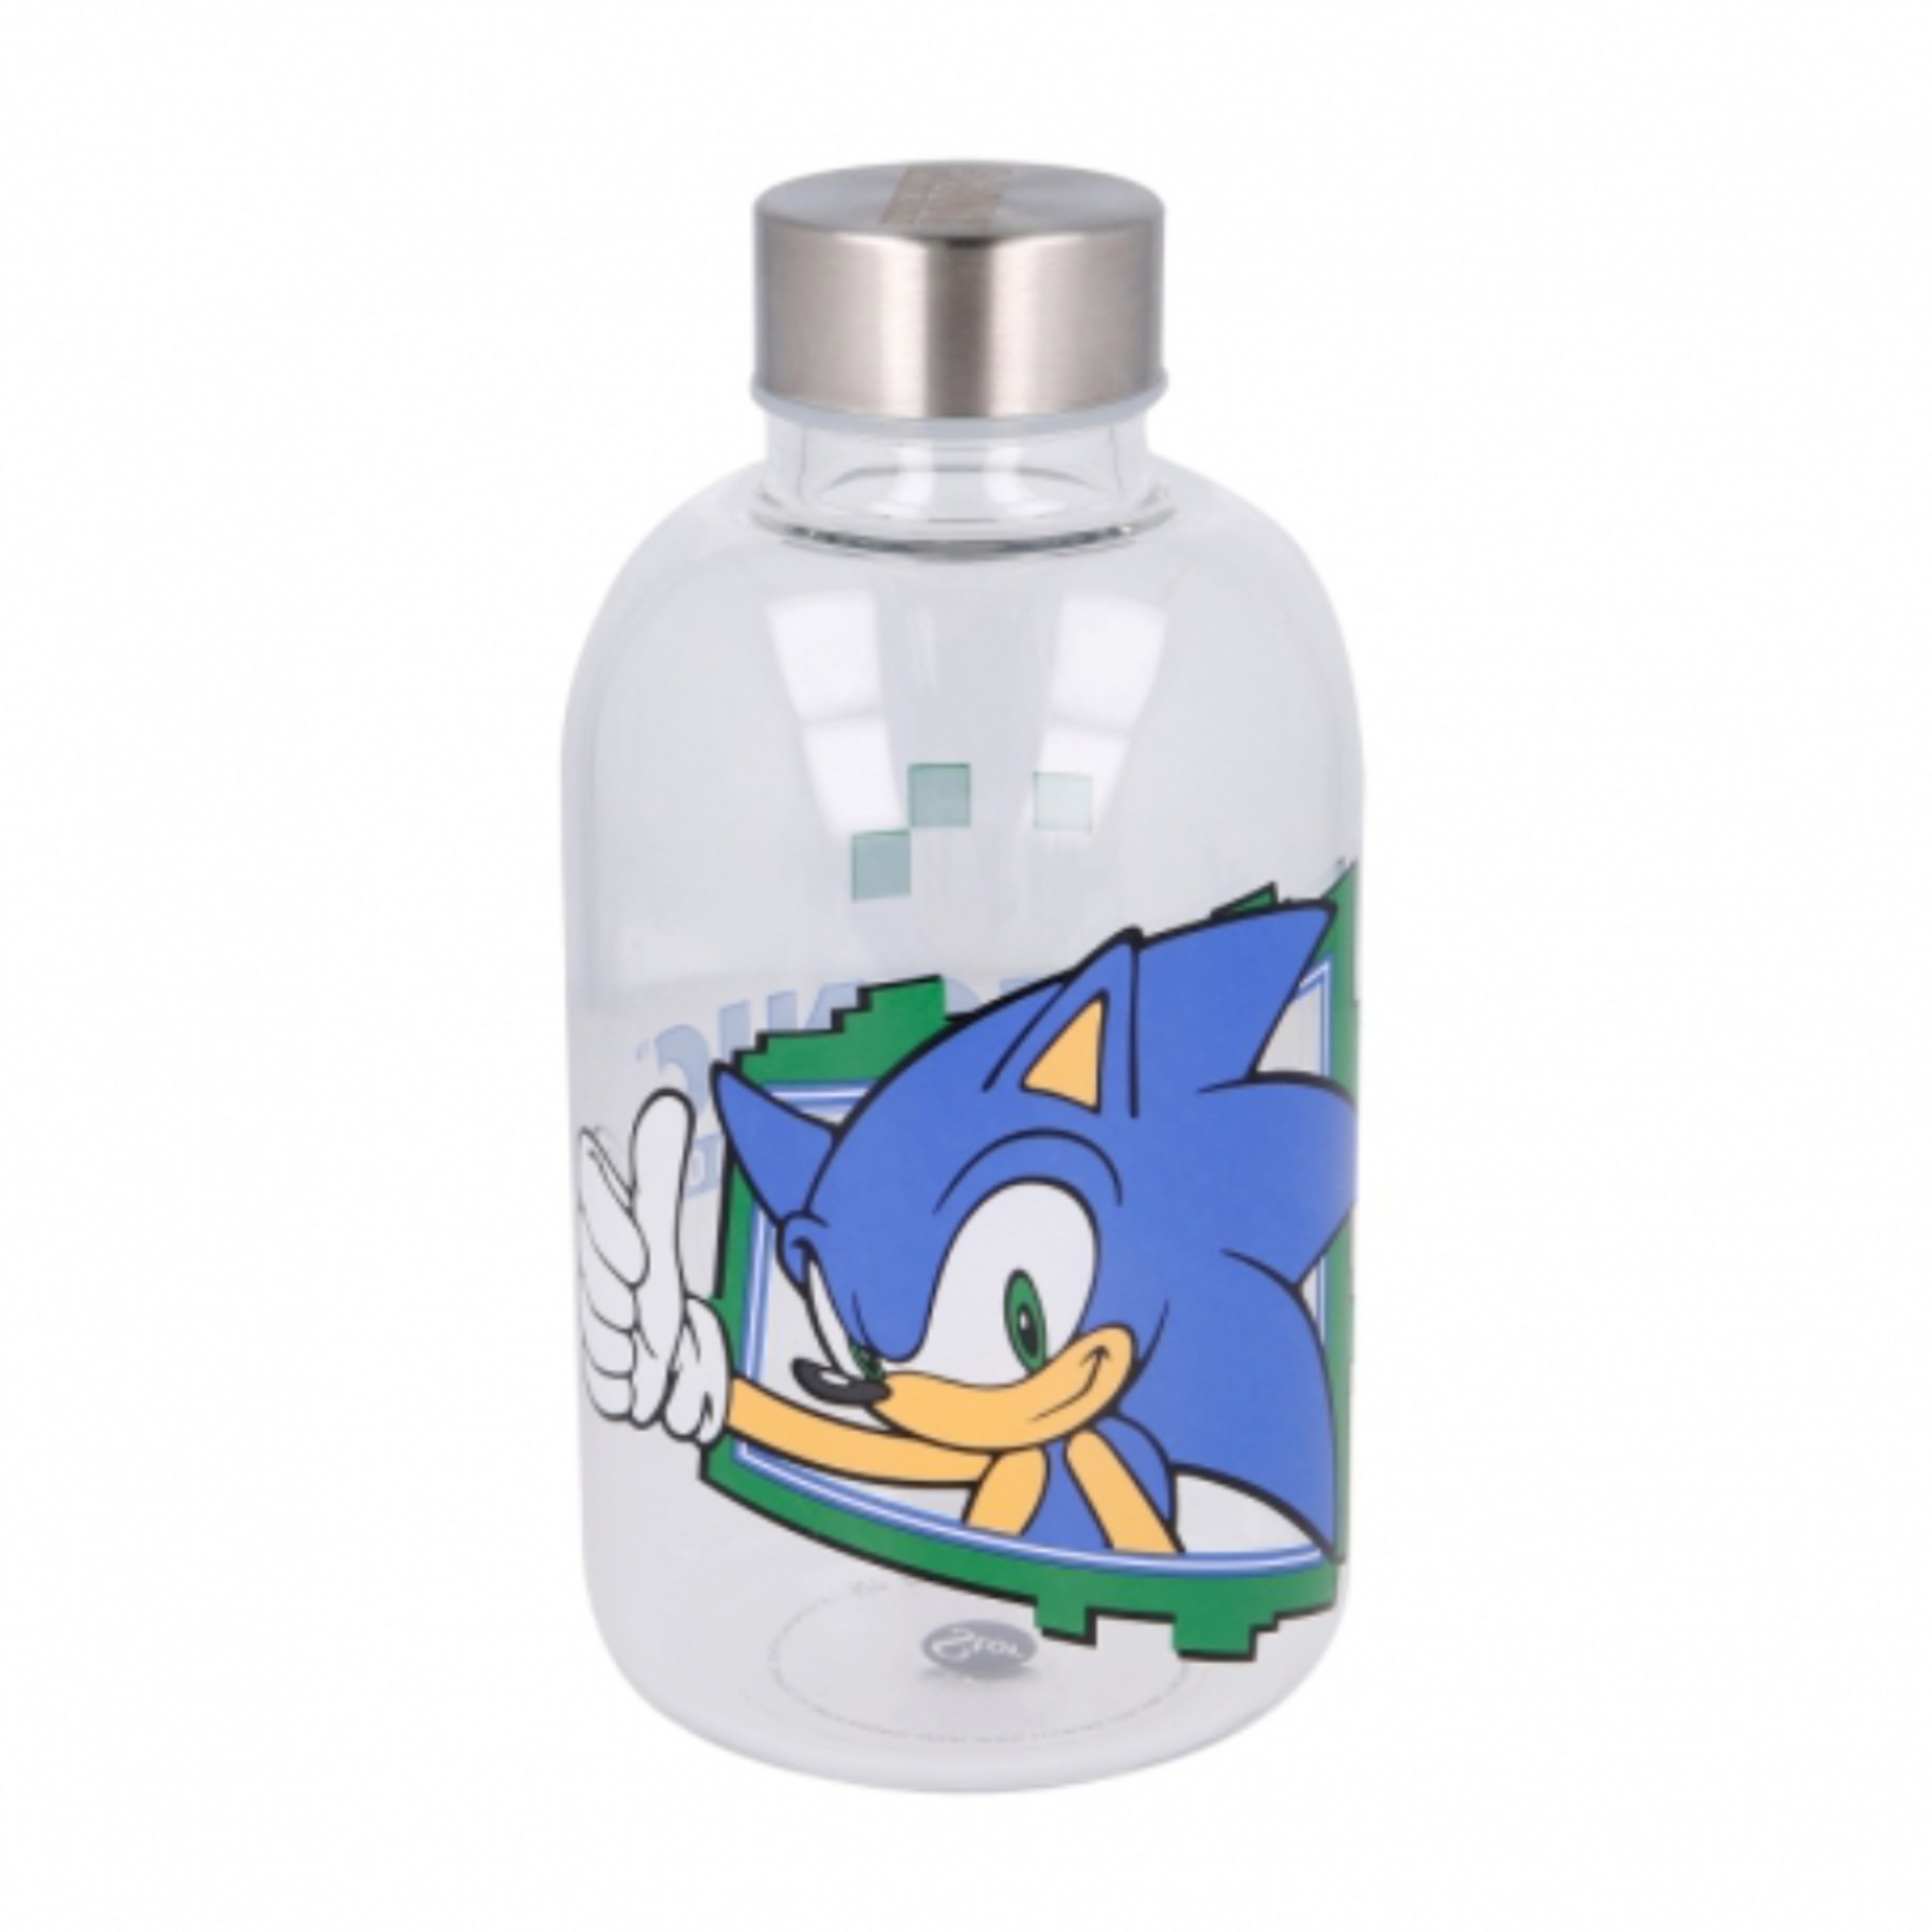 Botella Sonic 65687  MKP